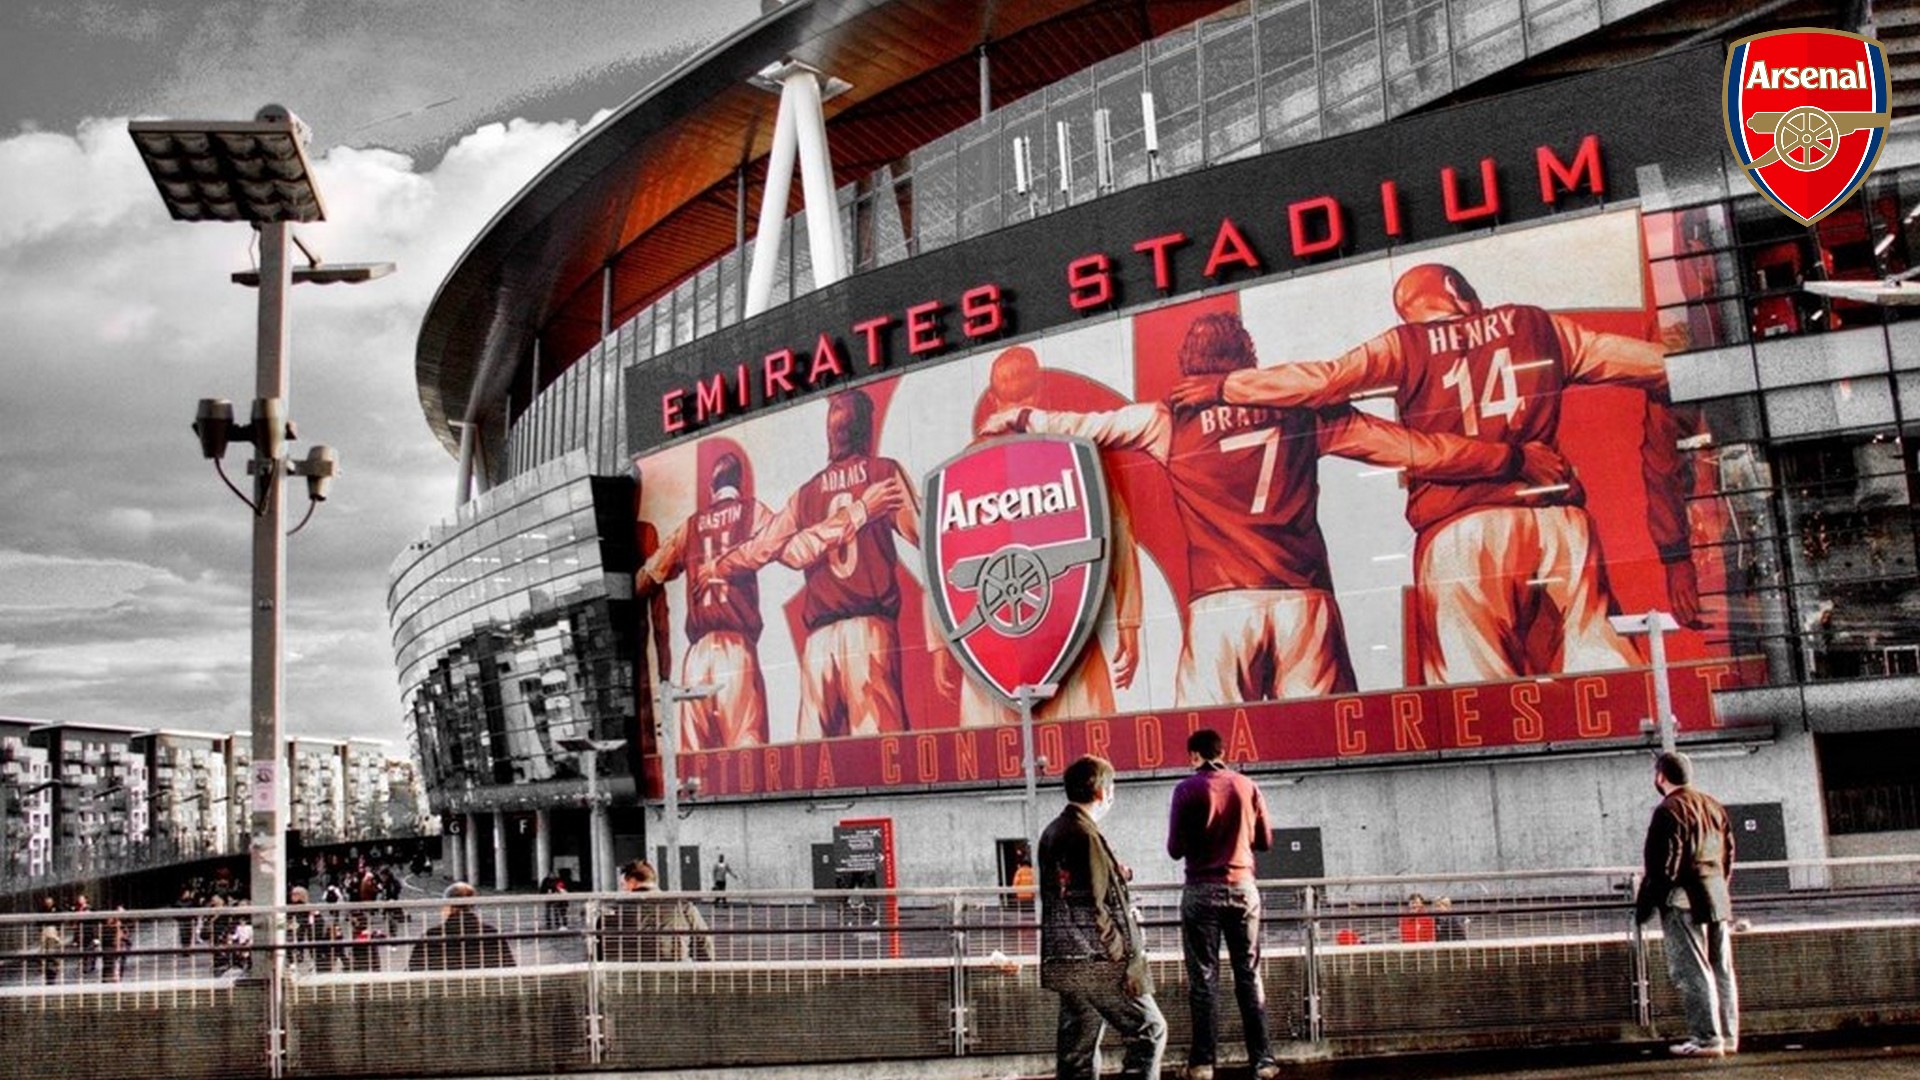 Arsenal Stadium Hd Wallpapers 2020 Football Wallpaper